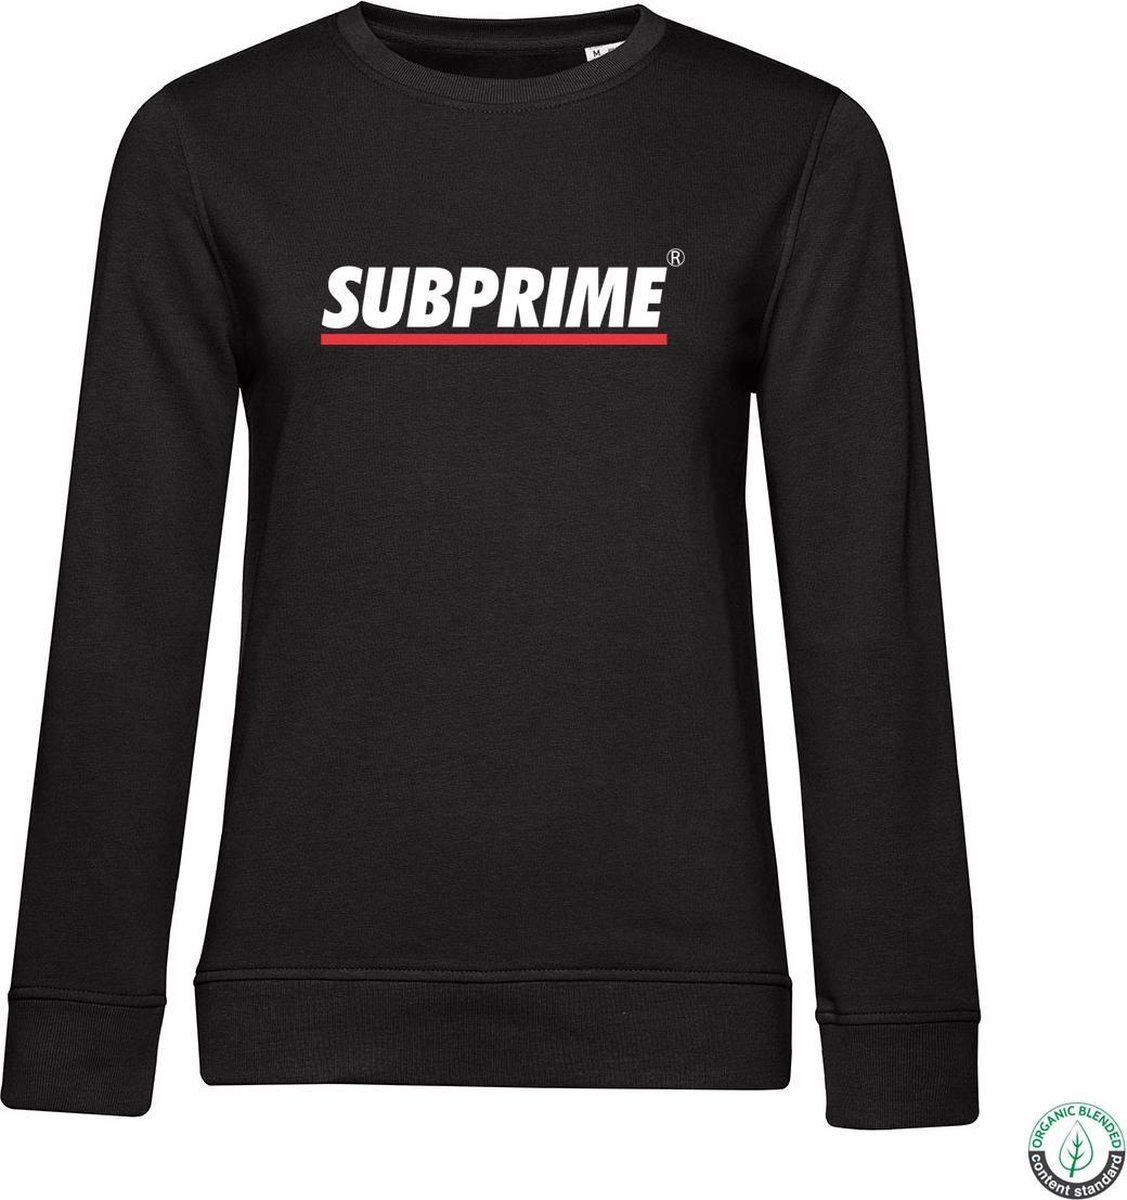 Subprime - Dames Sweaters Sweater Stripe Black - Zwart - Maat XXL